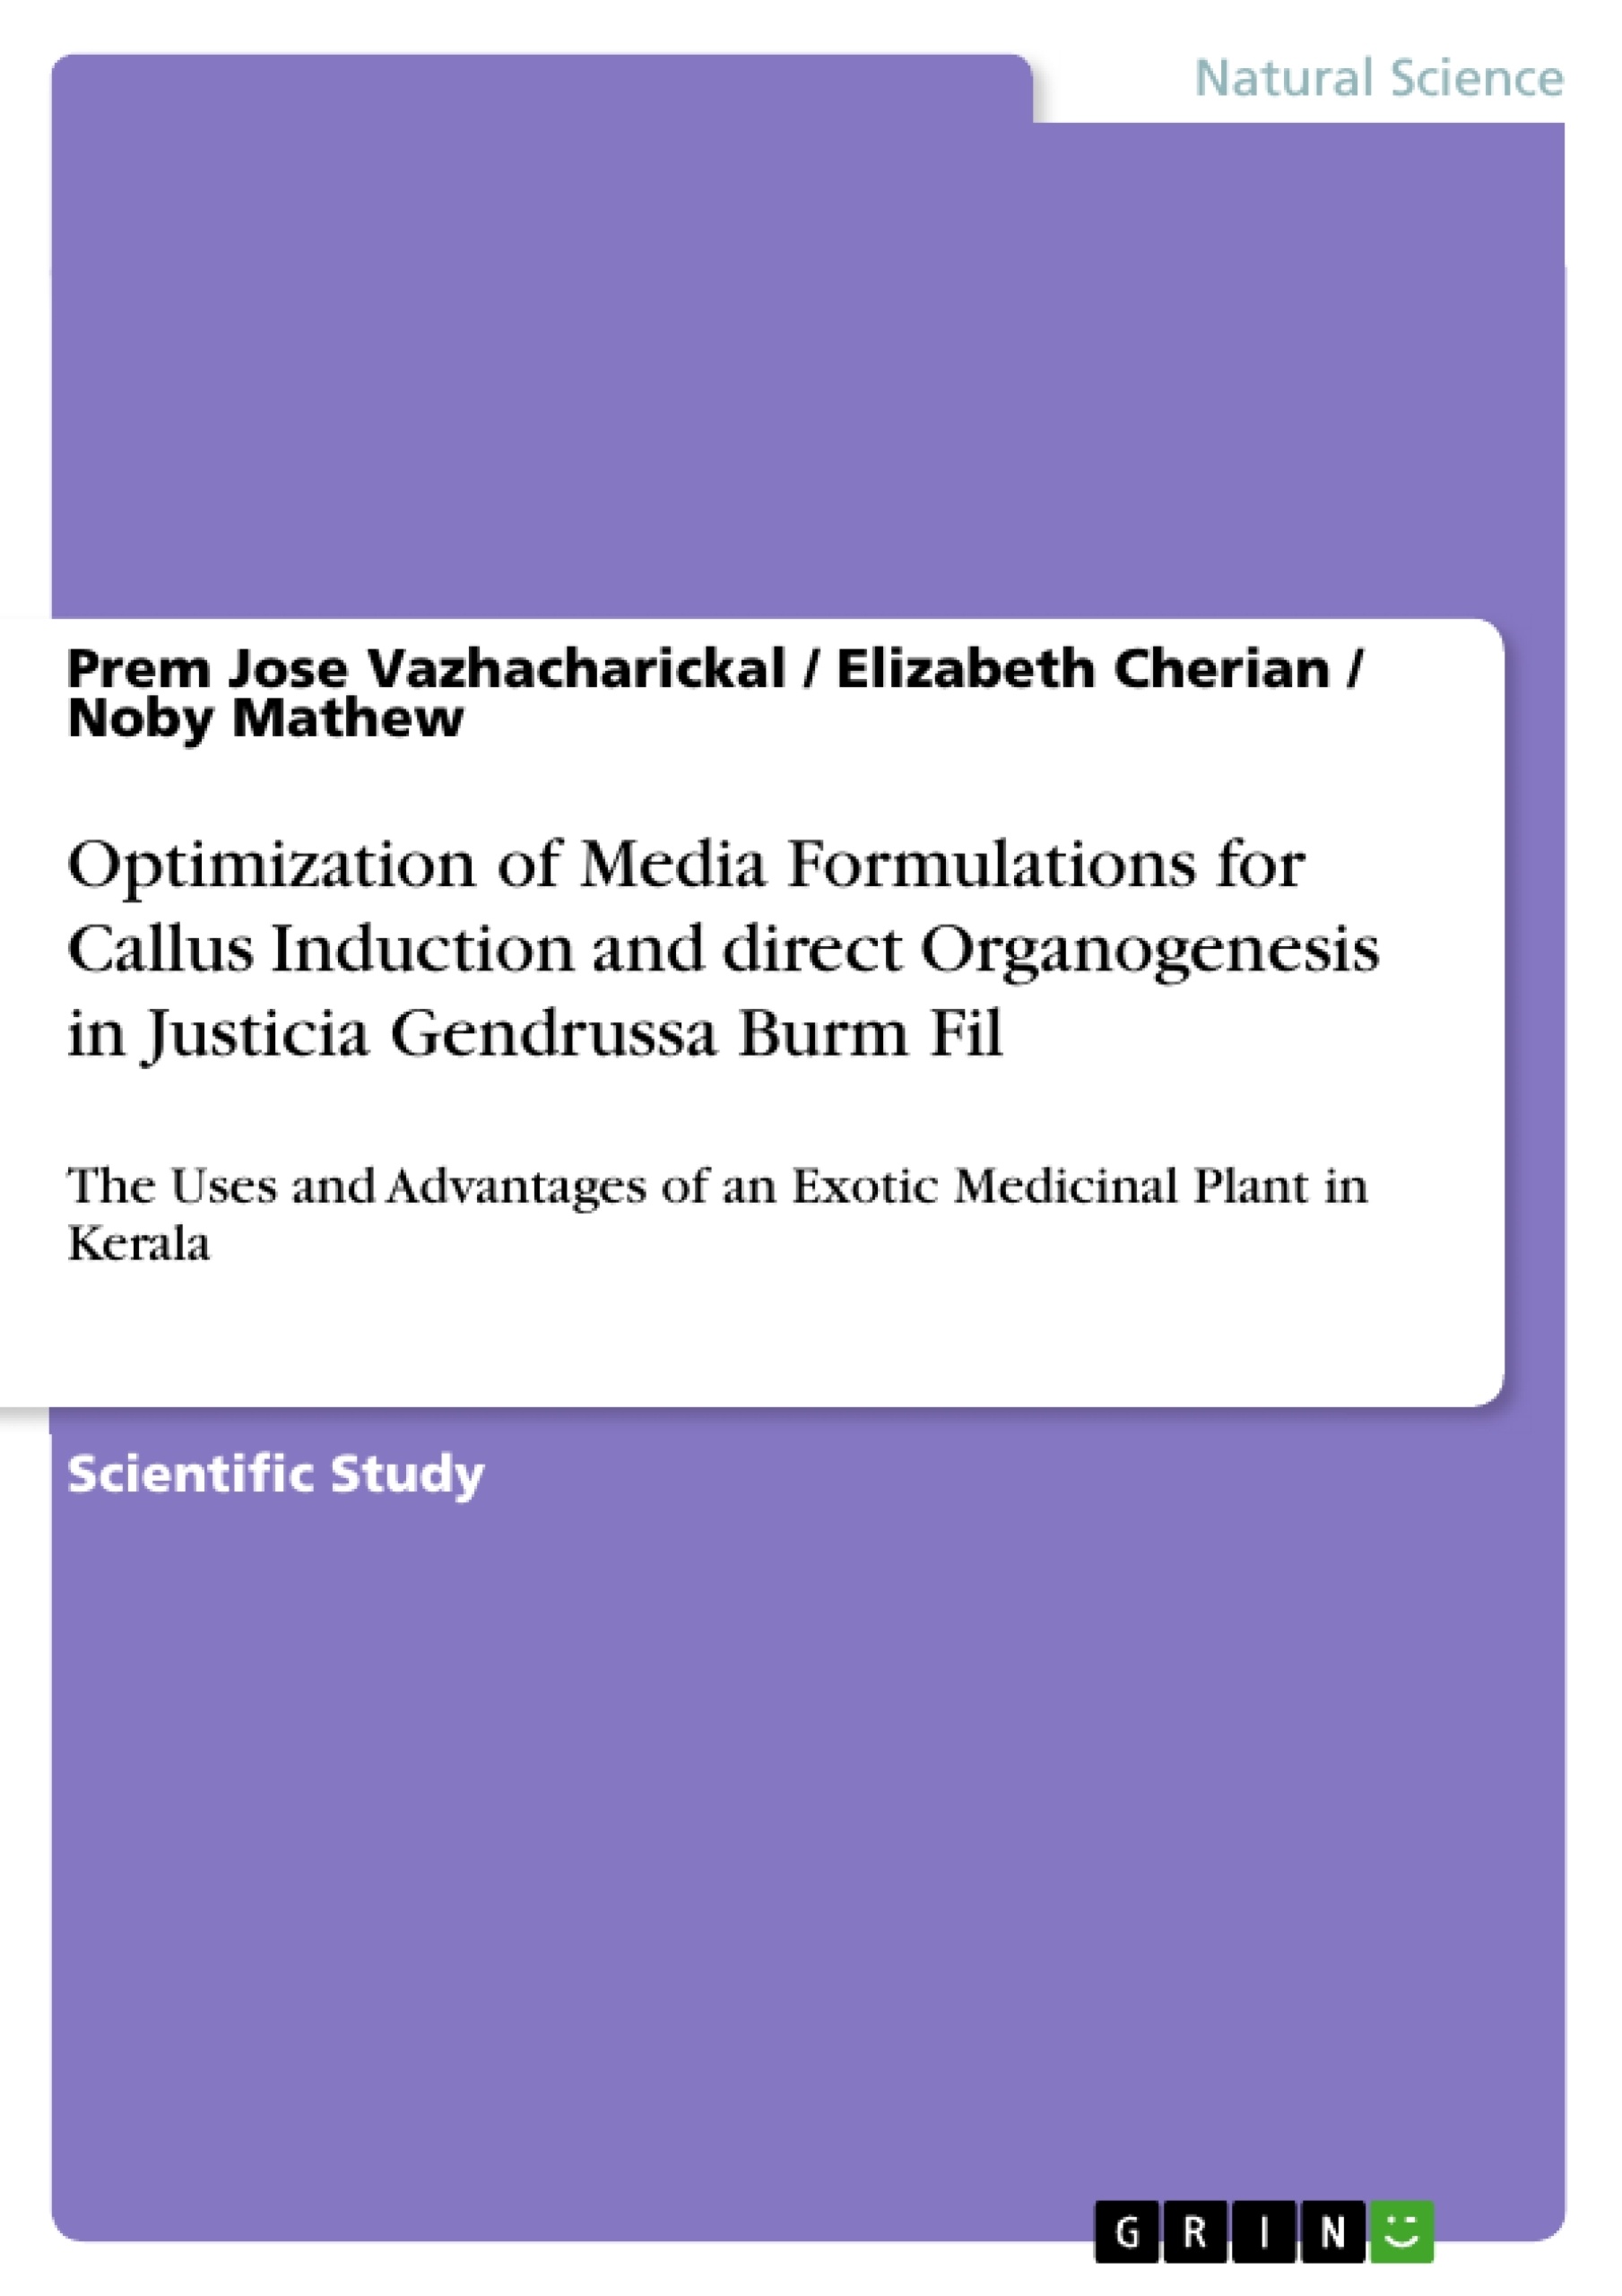 Título: Optimization of Media Formulations for Callus Induction and direct Organogenesis in Justicia Gendrussa Burm Fil